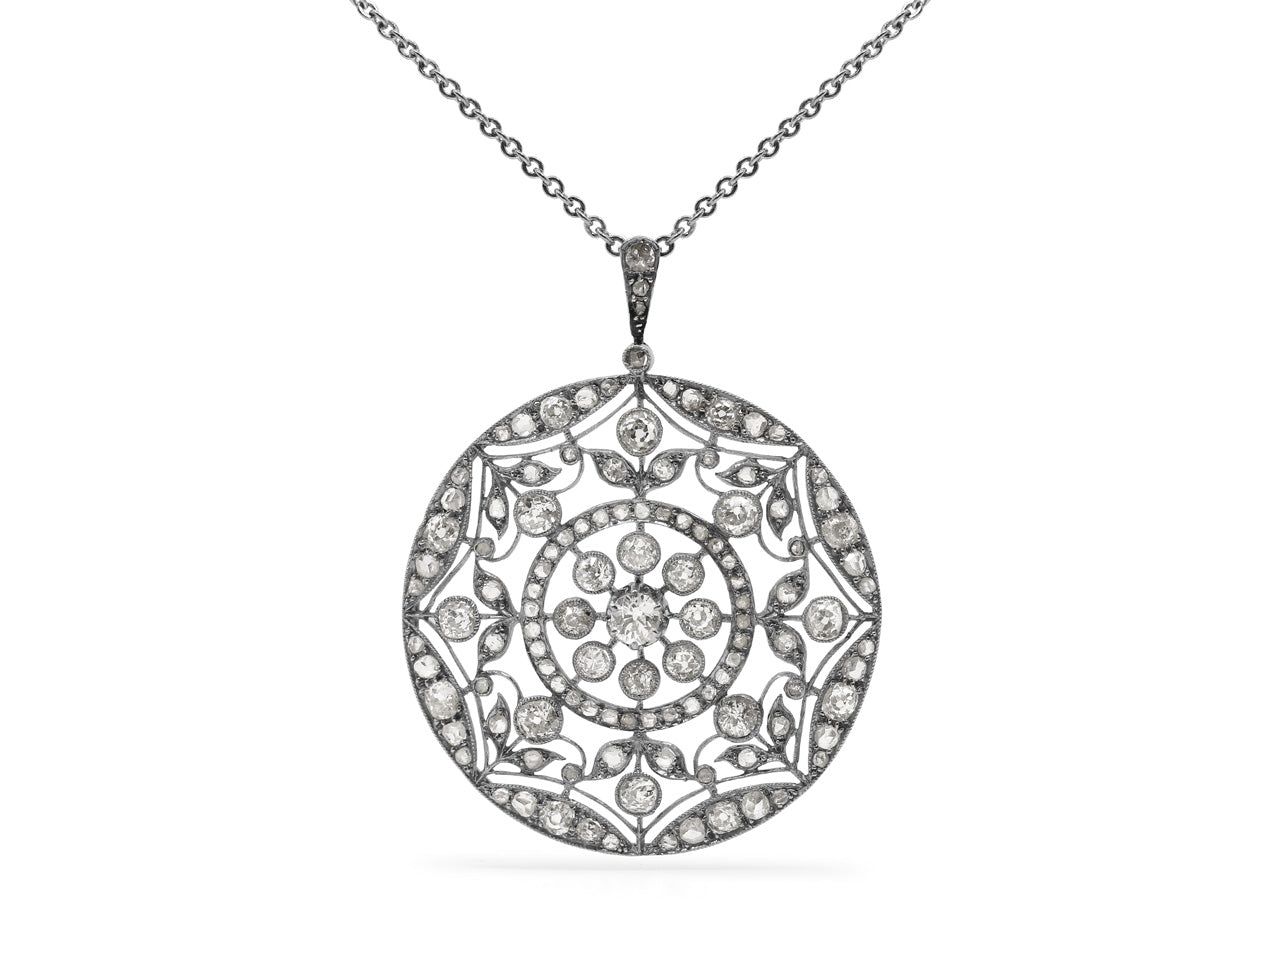 Antique Edwardian Diamond Necklace in Platinum